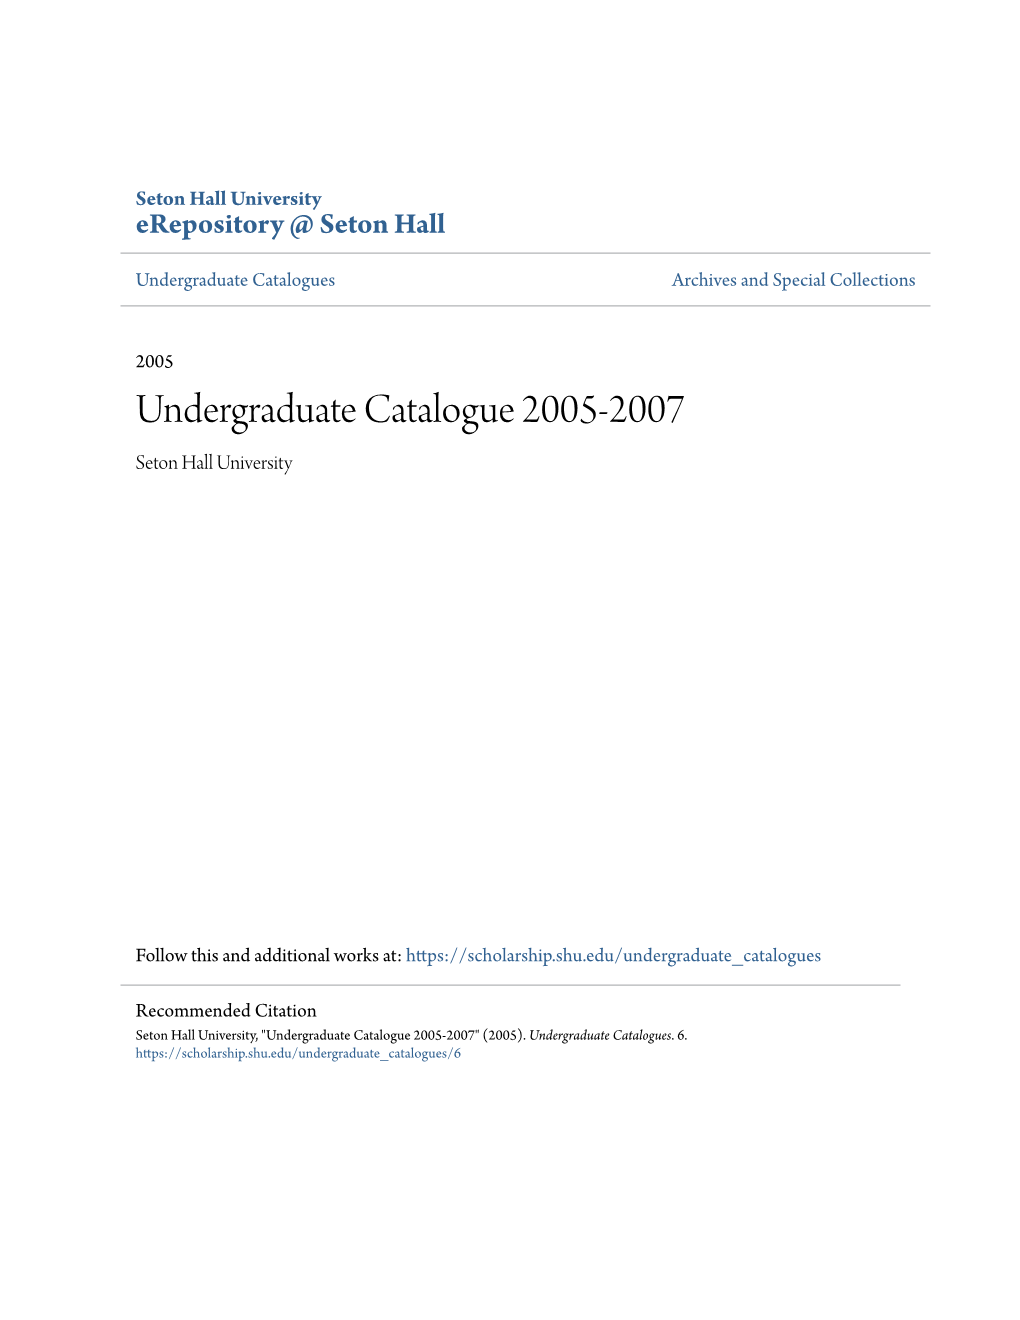 Undergraduate Catalogue 2005-2007 Seton Hall University